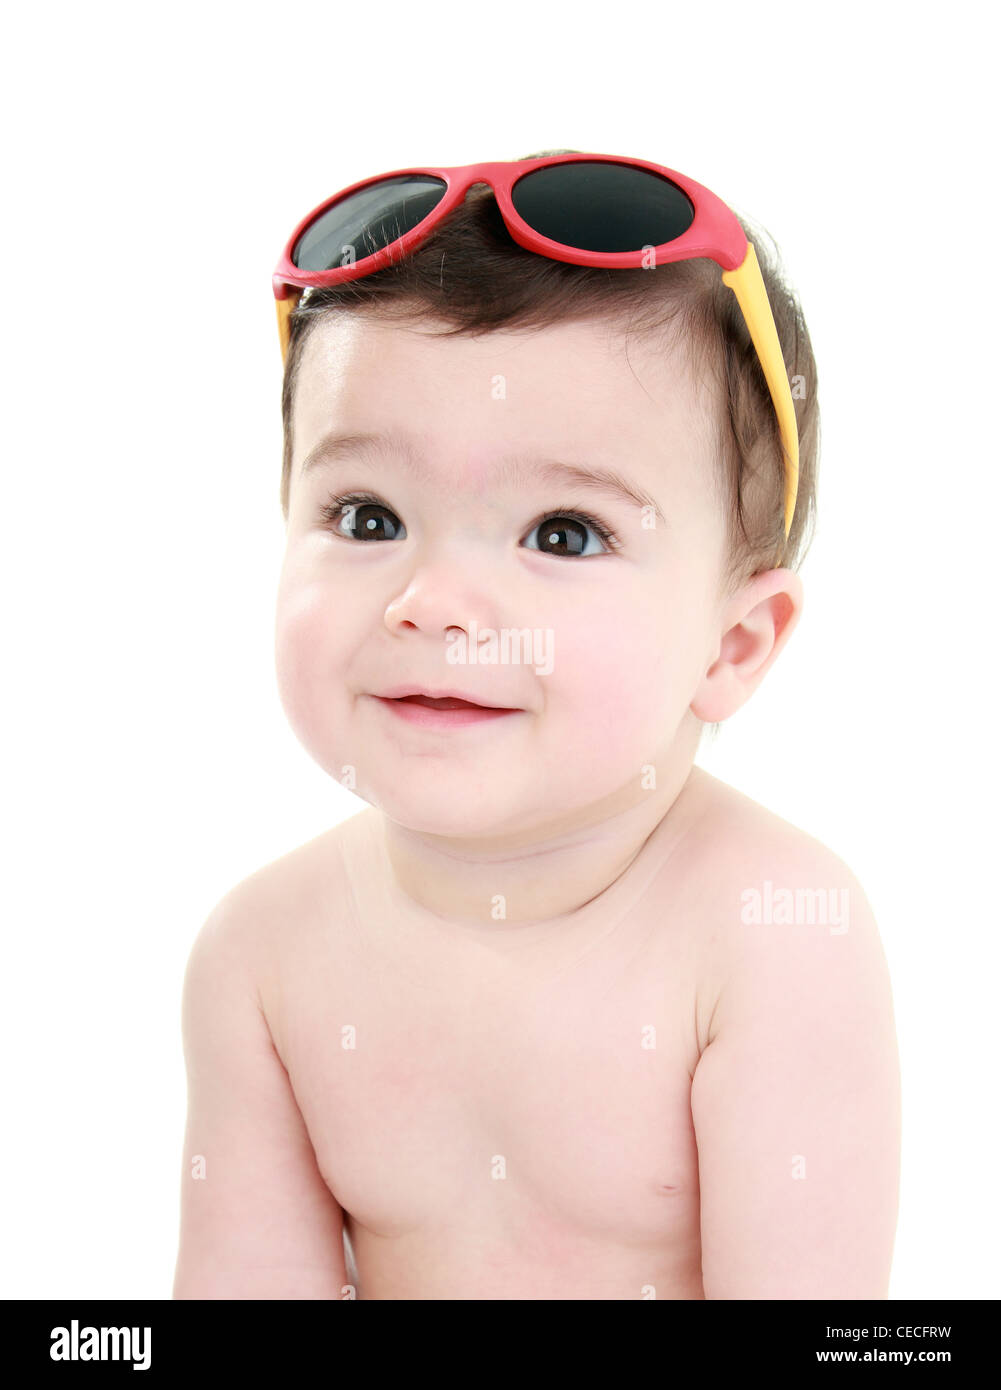 Baby Portrait Cute Baby Wearing Sunglasses Stock Photo Alamy